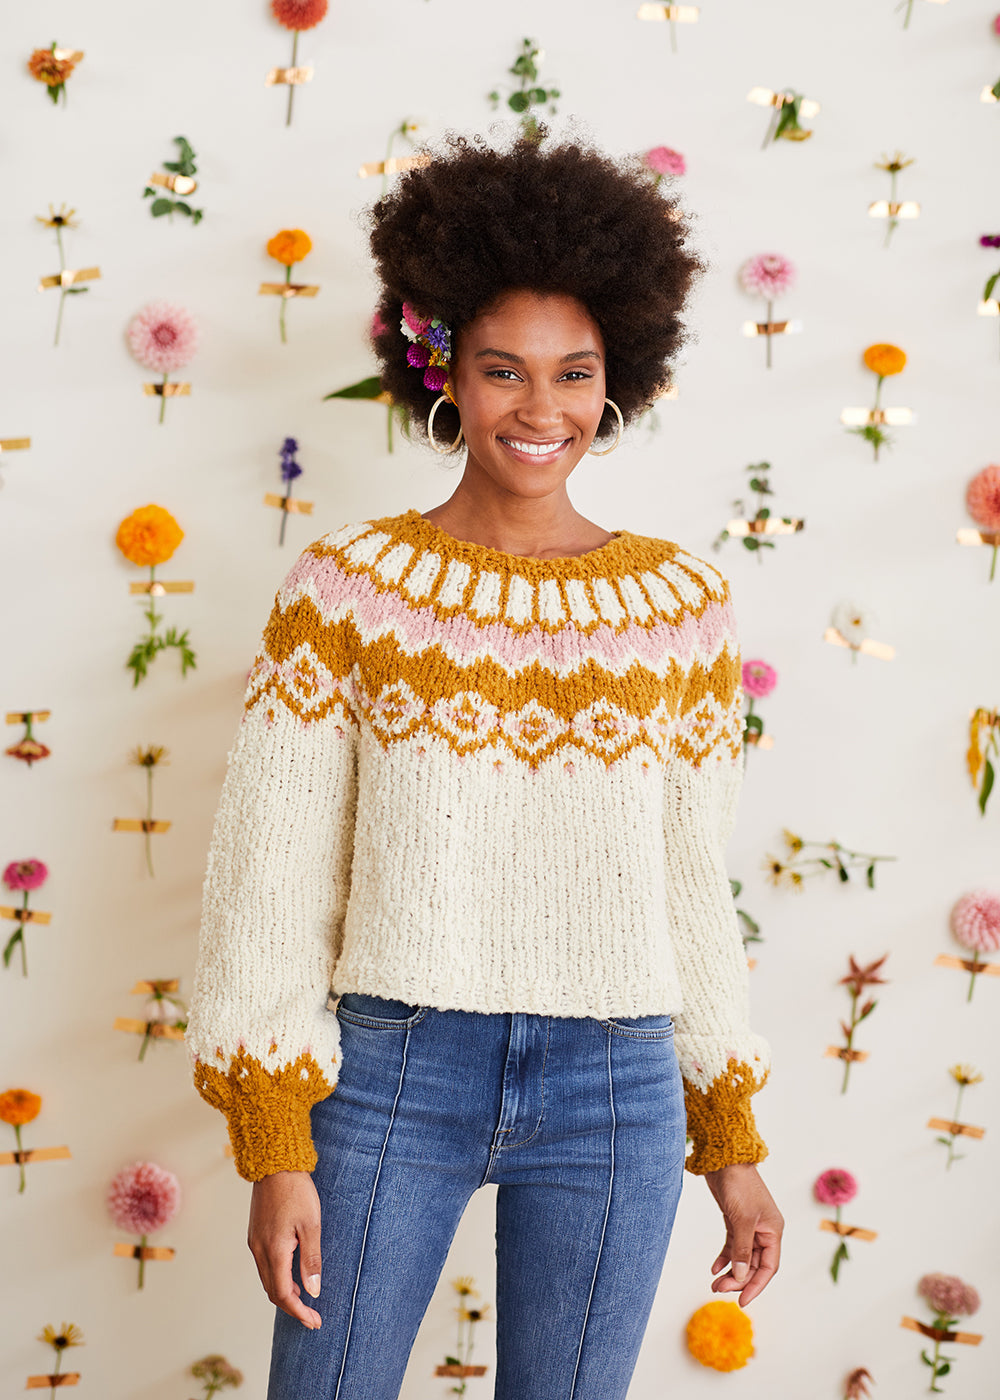 Express Yourself Sweater Colorwork Sweater in Serenity Yarn